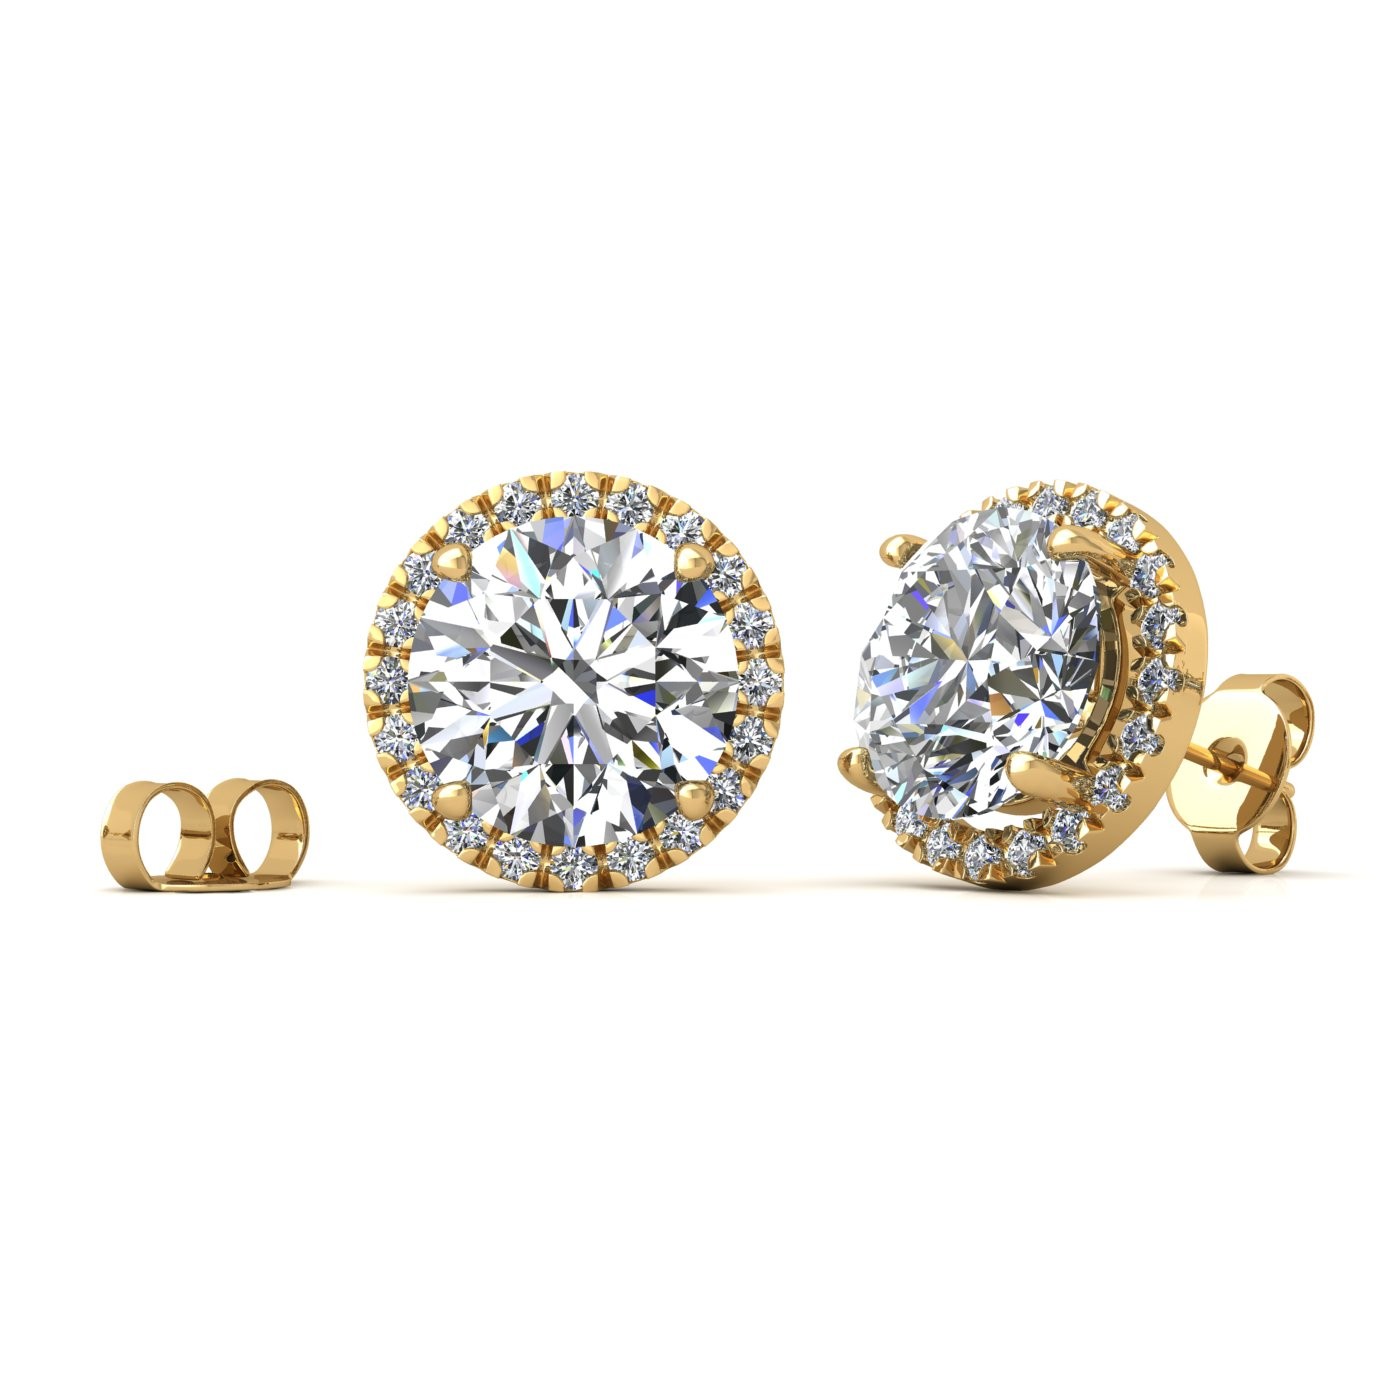 18k yellow gold  2,5 ct each (5,0 tcw) 4 prongs round shape diamond earrings with diamond pavÉ set halo Photos & images